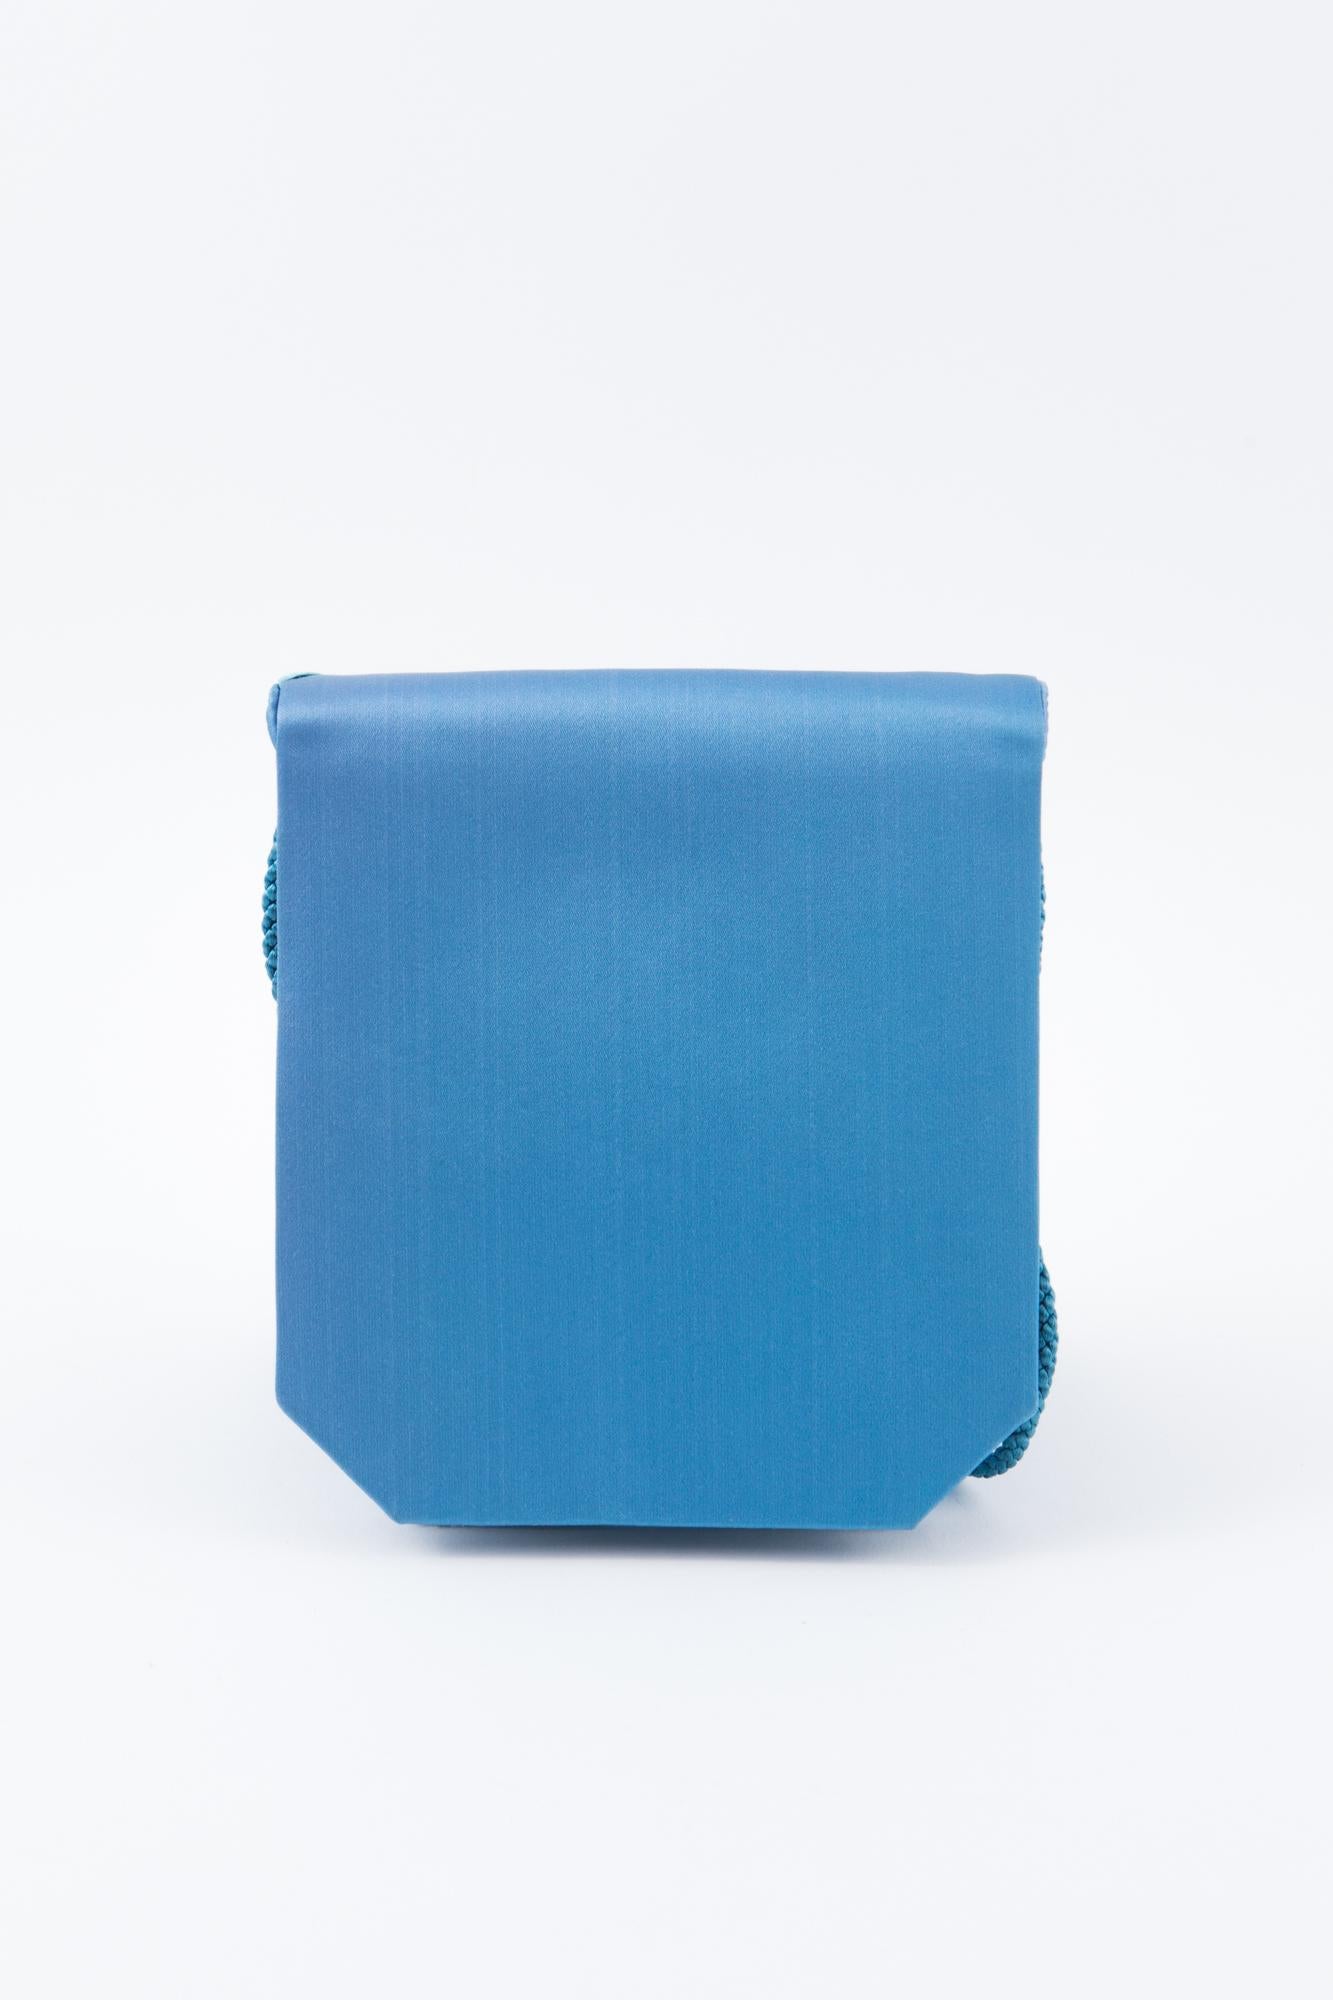 Blue Nina Ricci Turquoise Silk Evening Bag